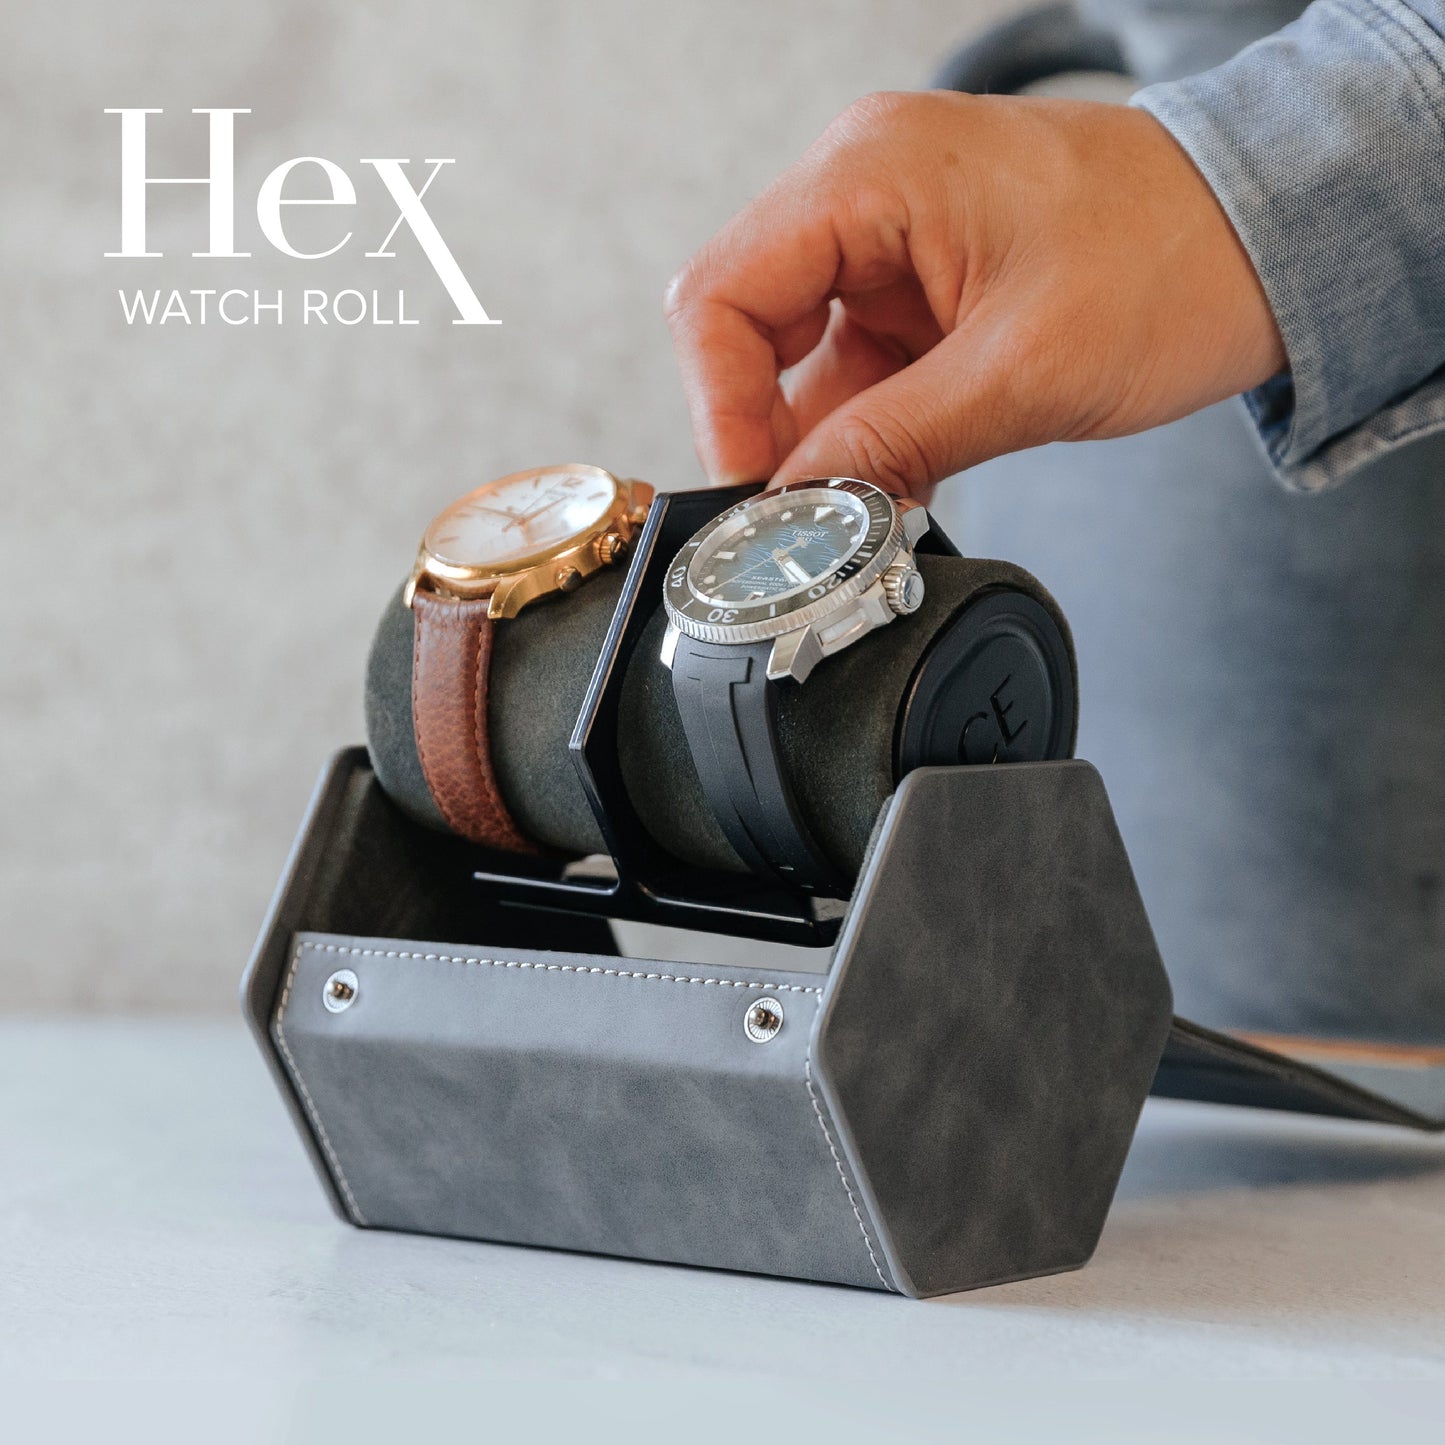 HEX Travel Watch Roll - 2 Slot